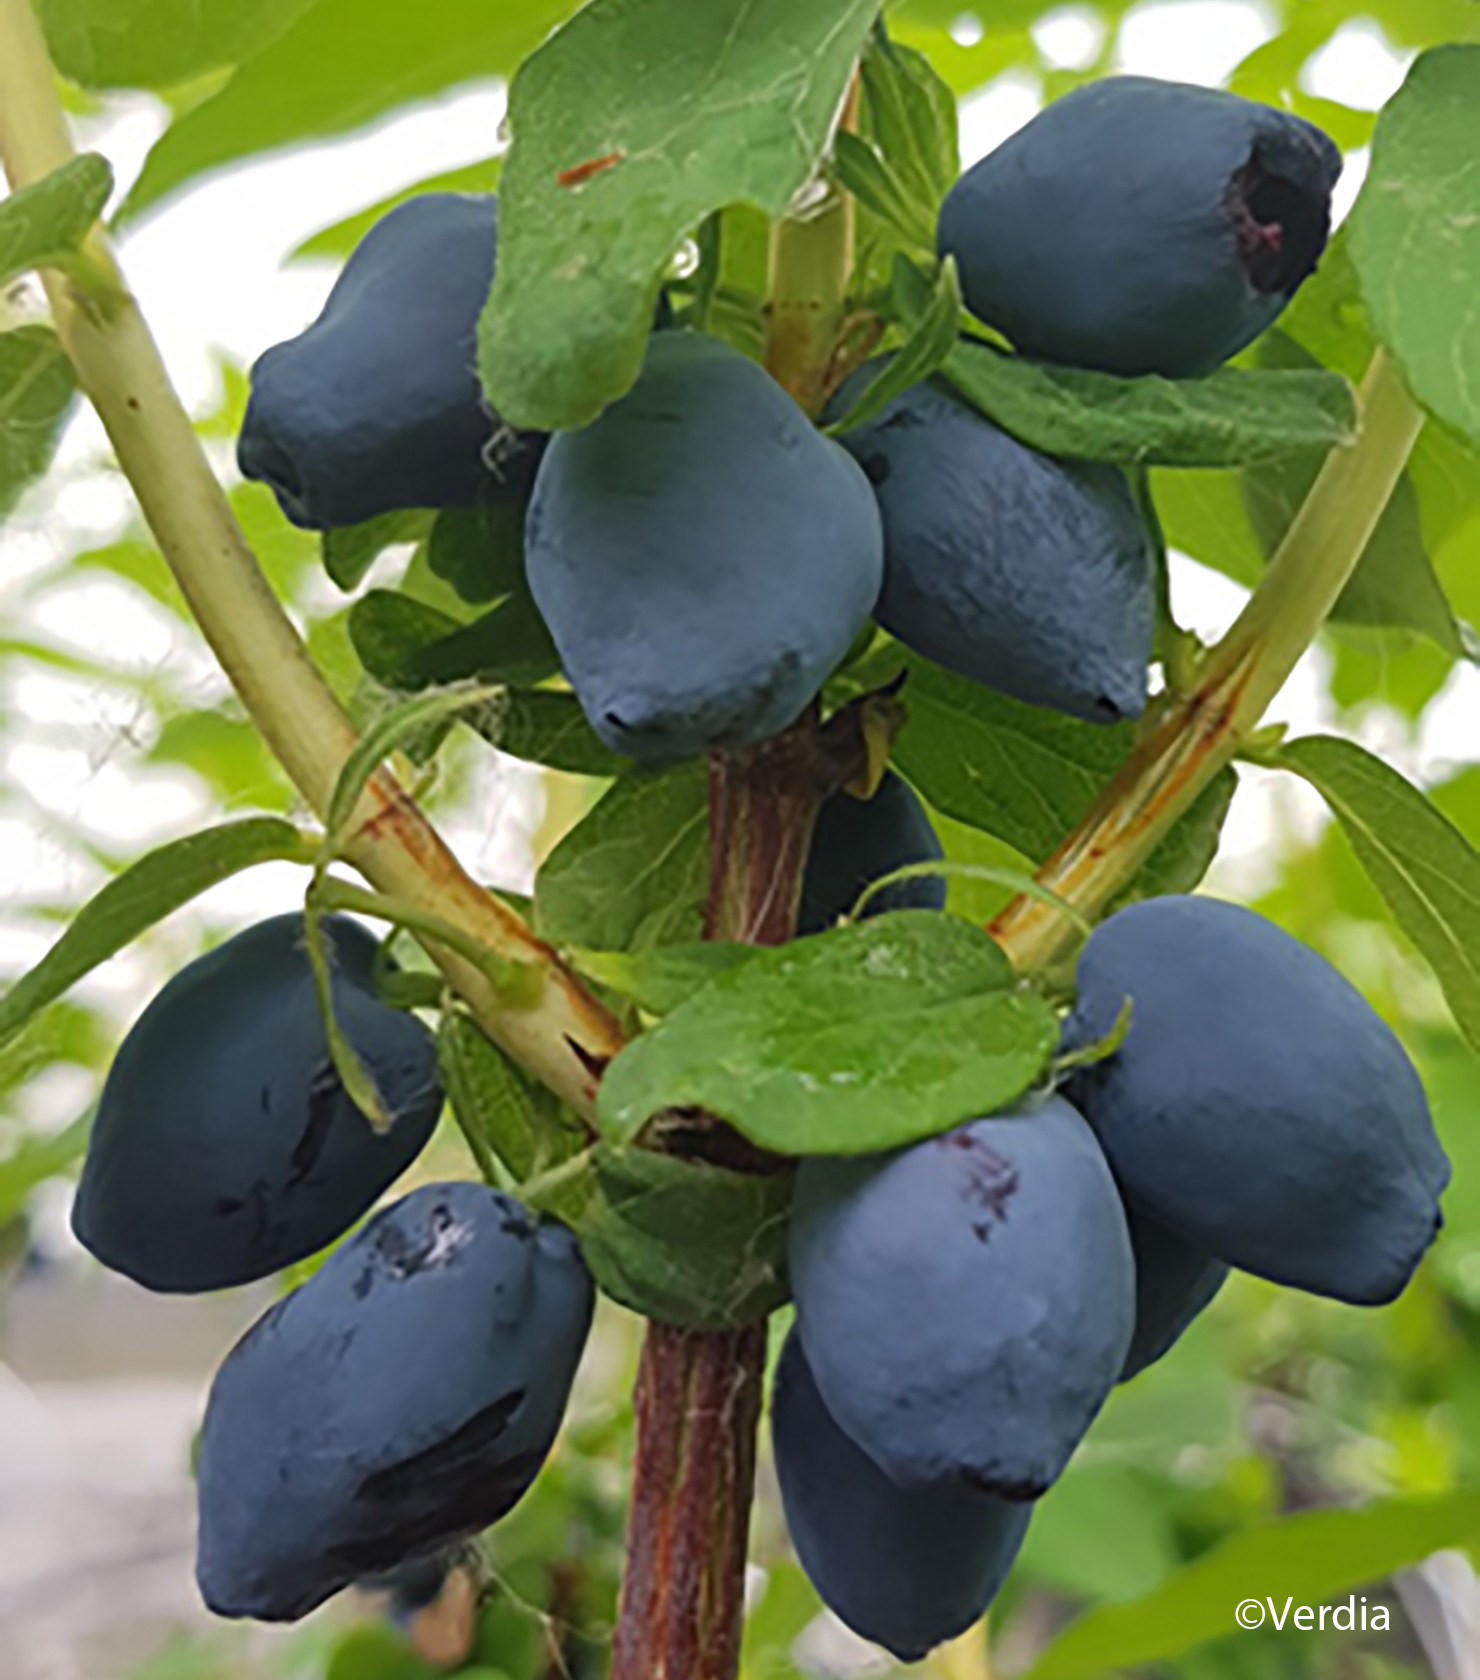 LONICERA caerulea Fruity berry